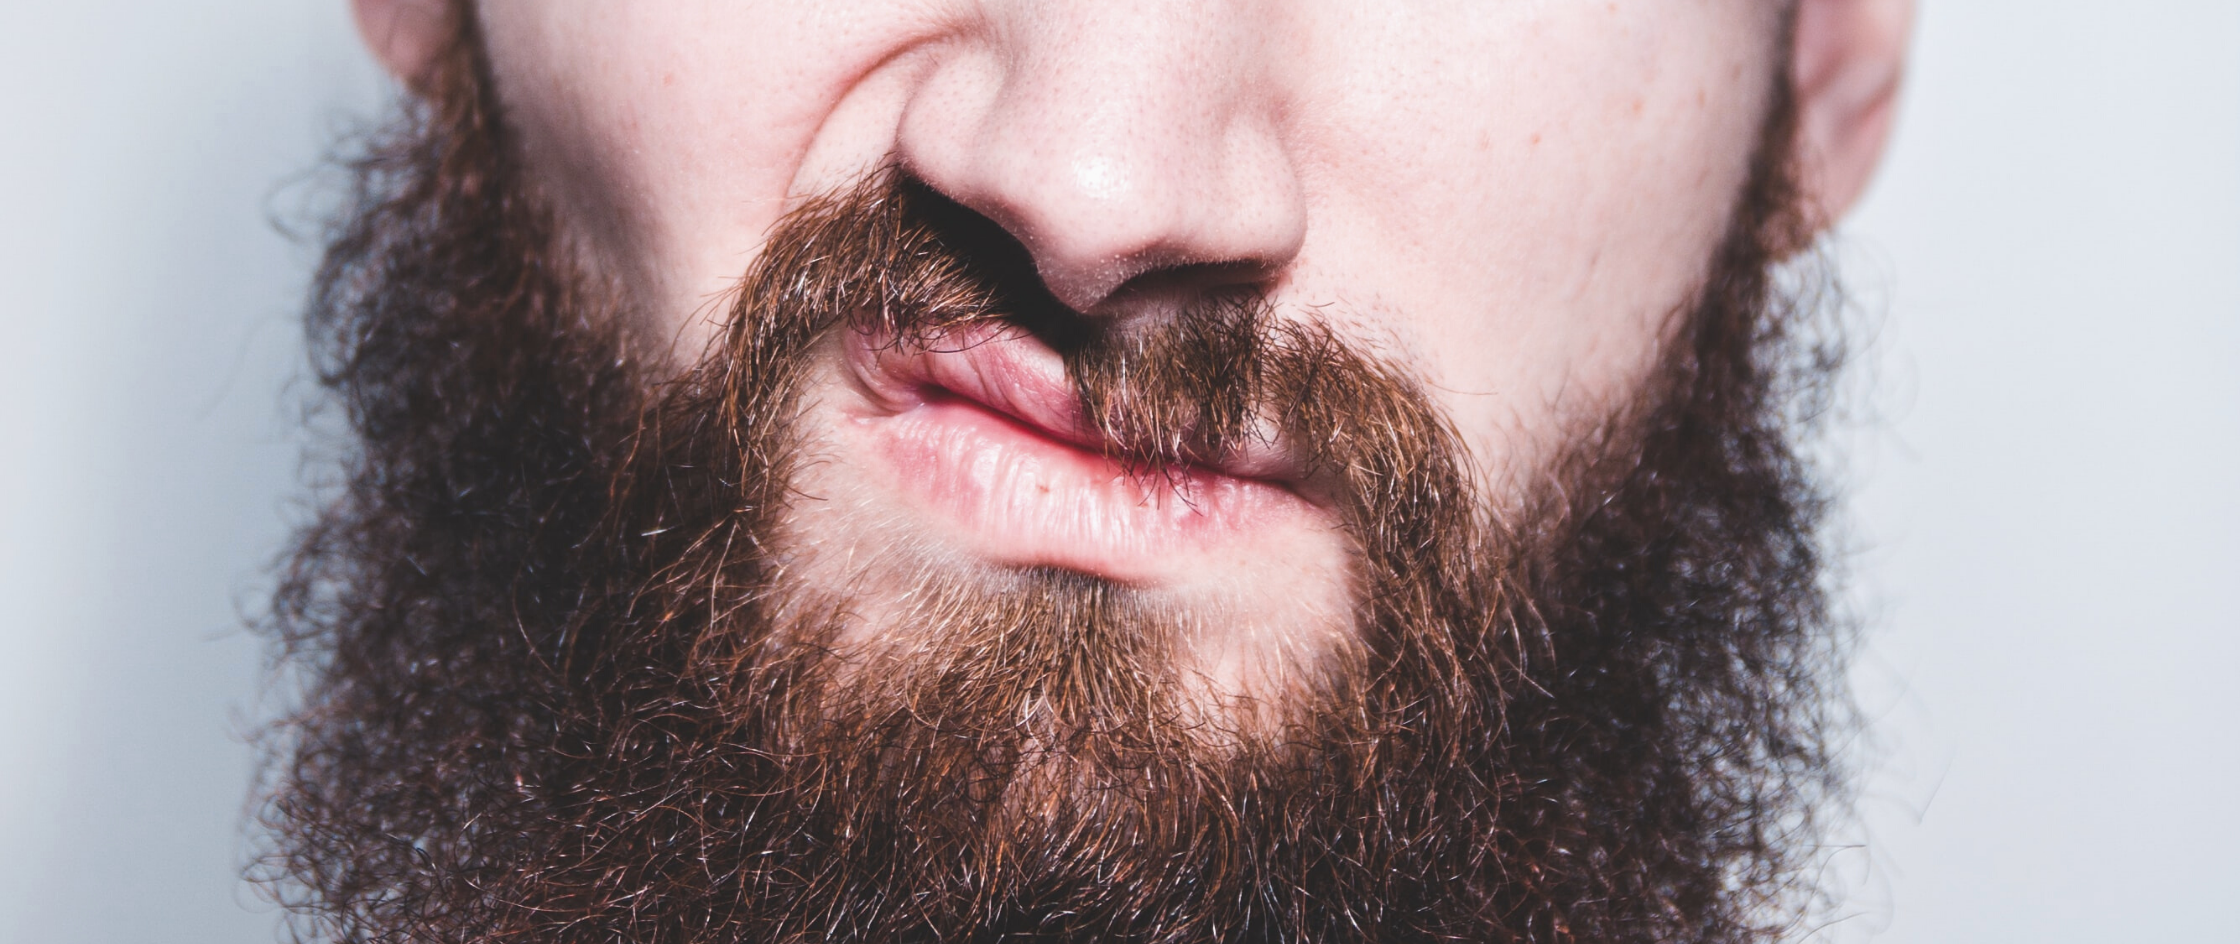 Beard Itch